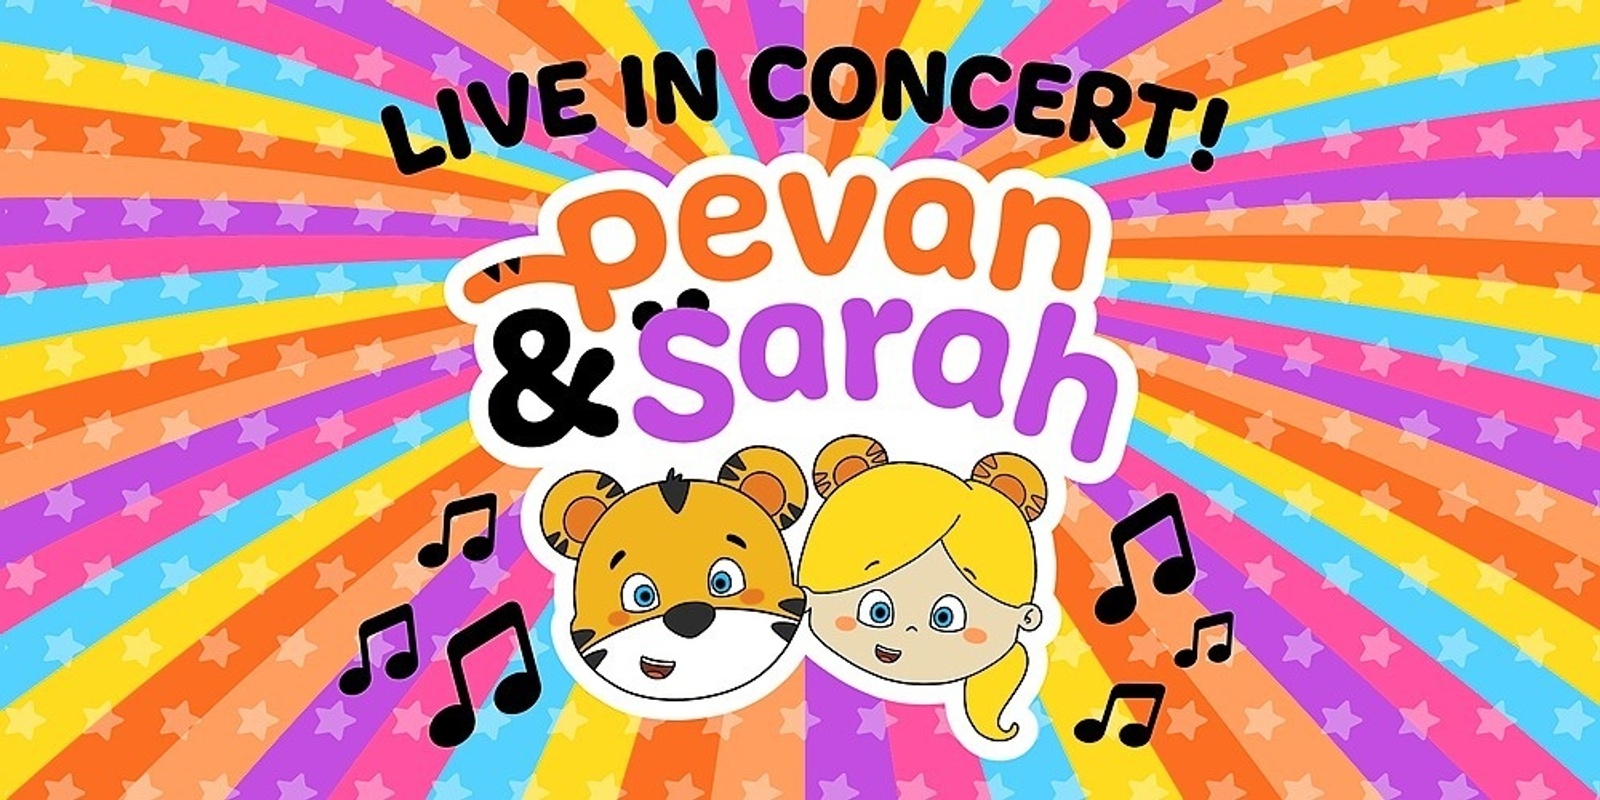 Banner image for Pevan & Sarah in Concert BALLARAT SHOW